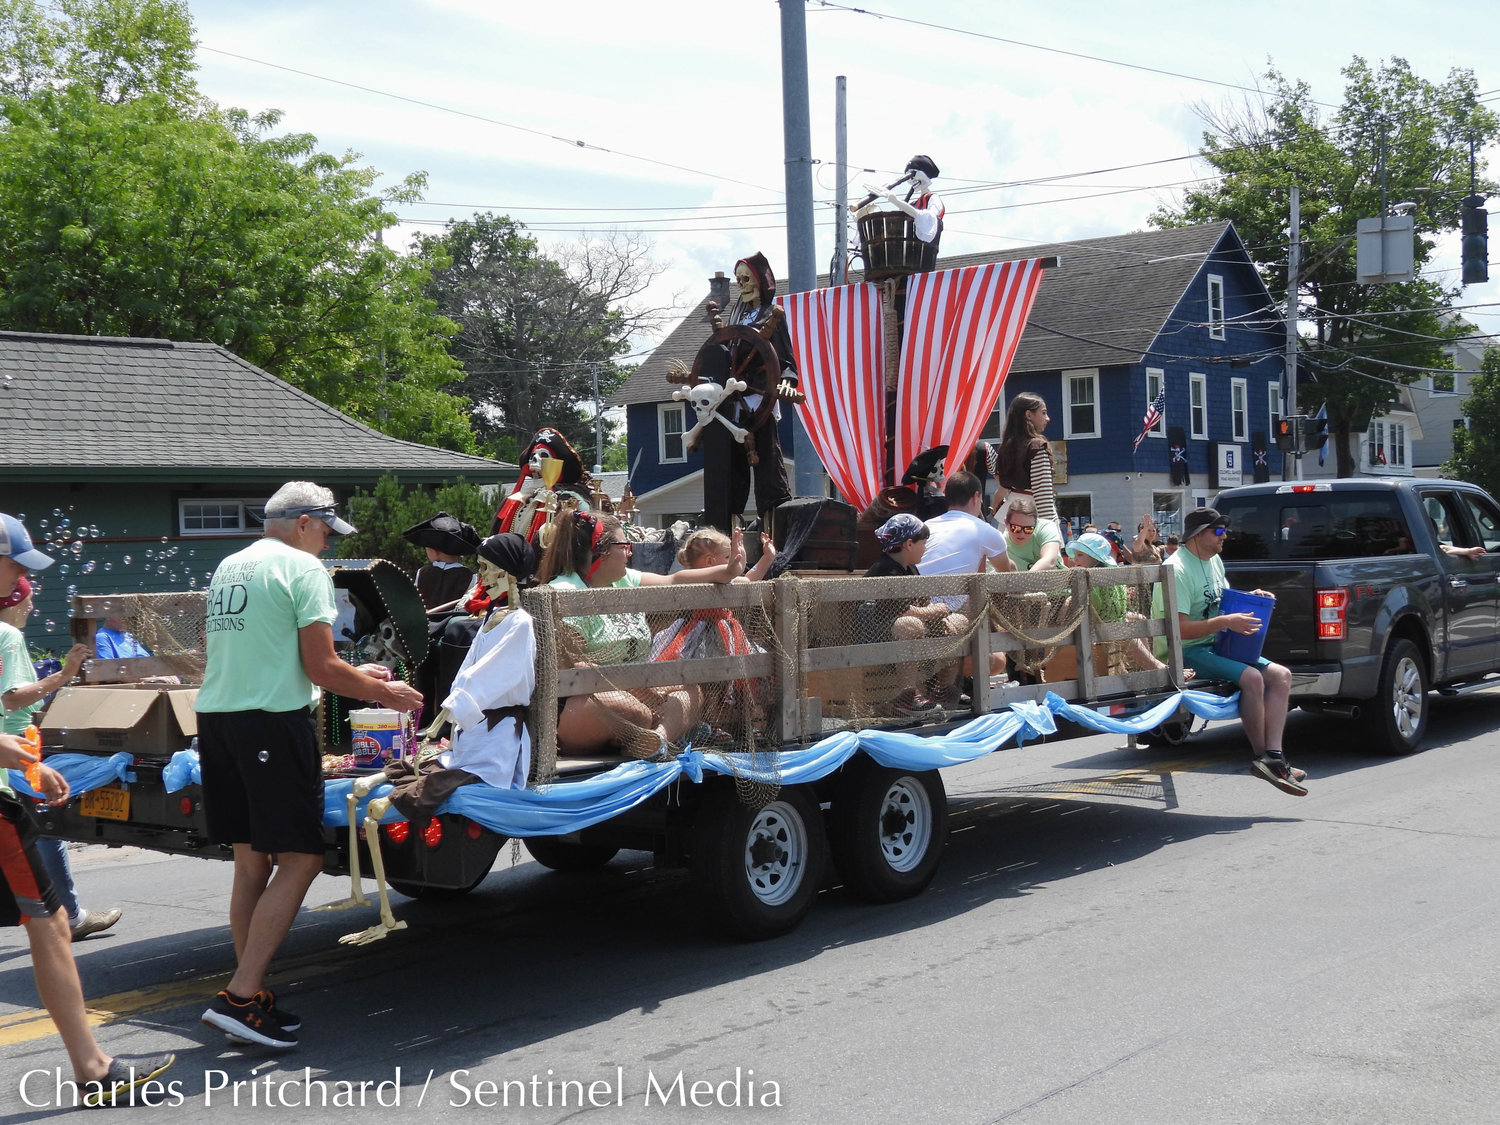 The Sylvan Beach Pirate's Parade makes its way down Main Street.